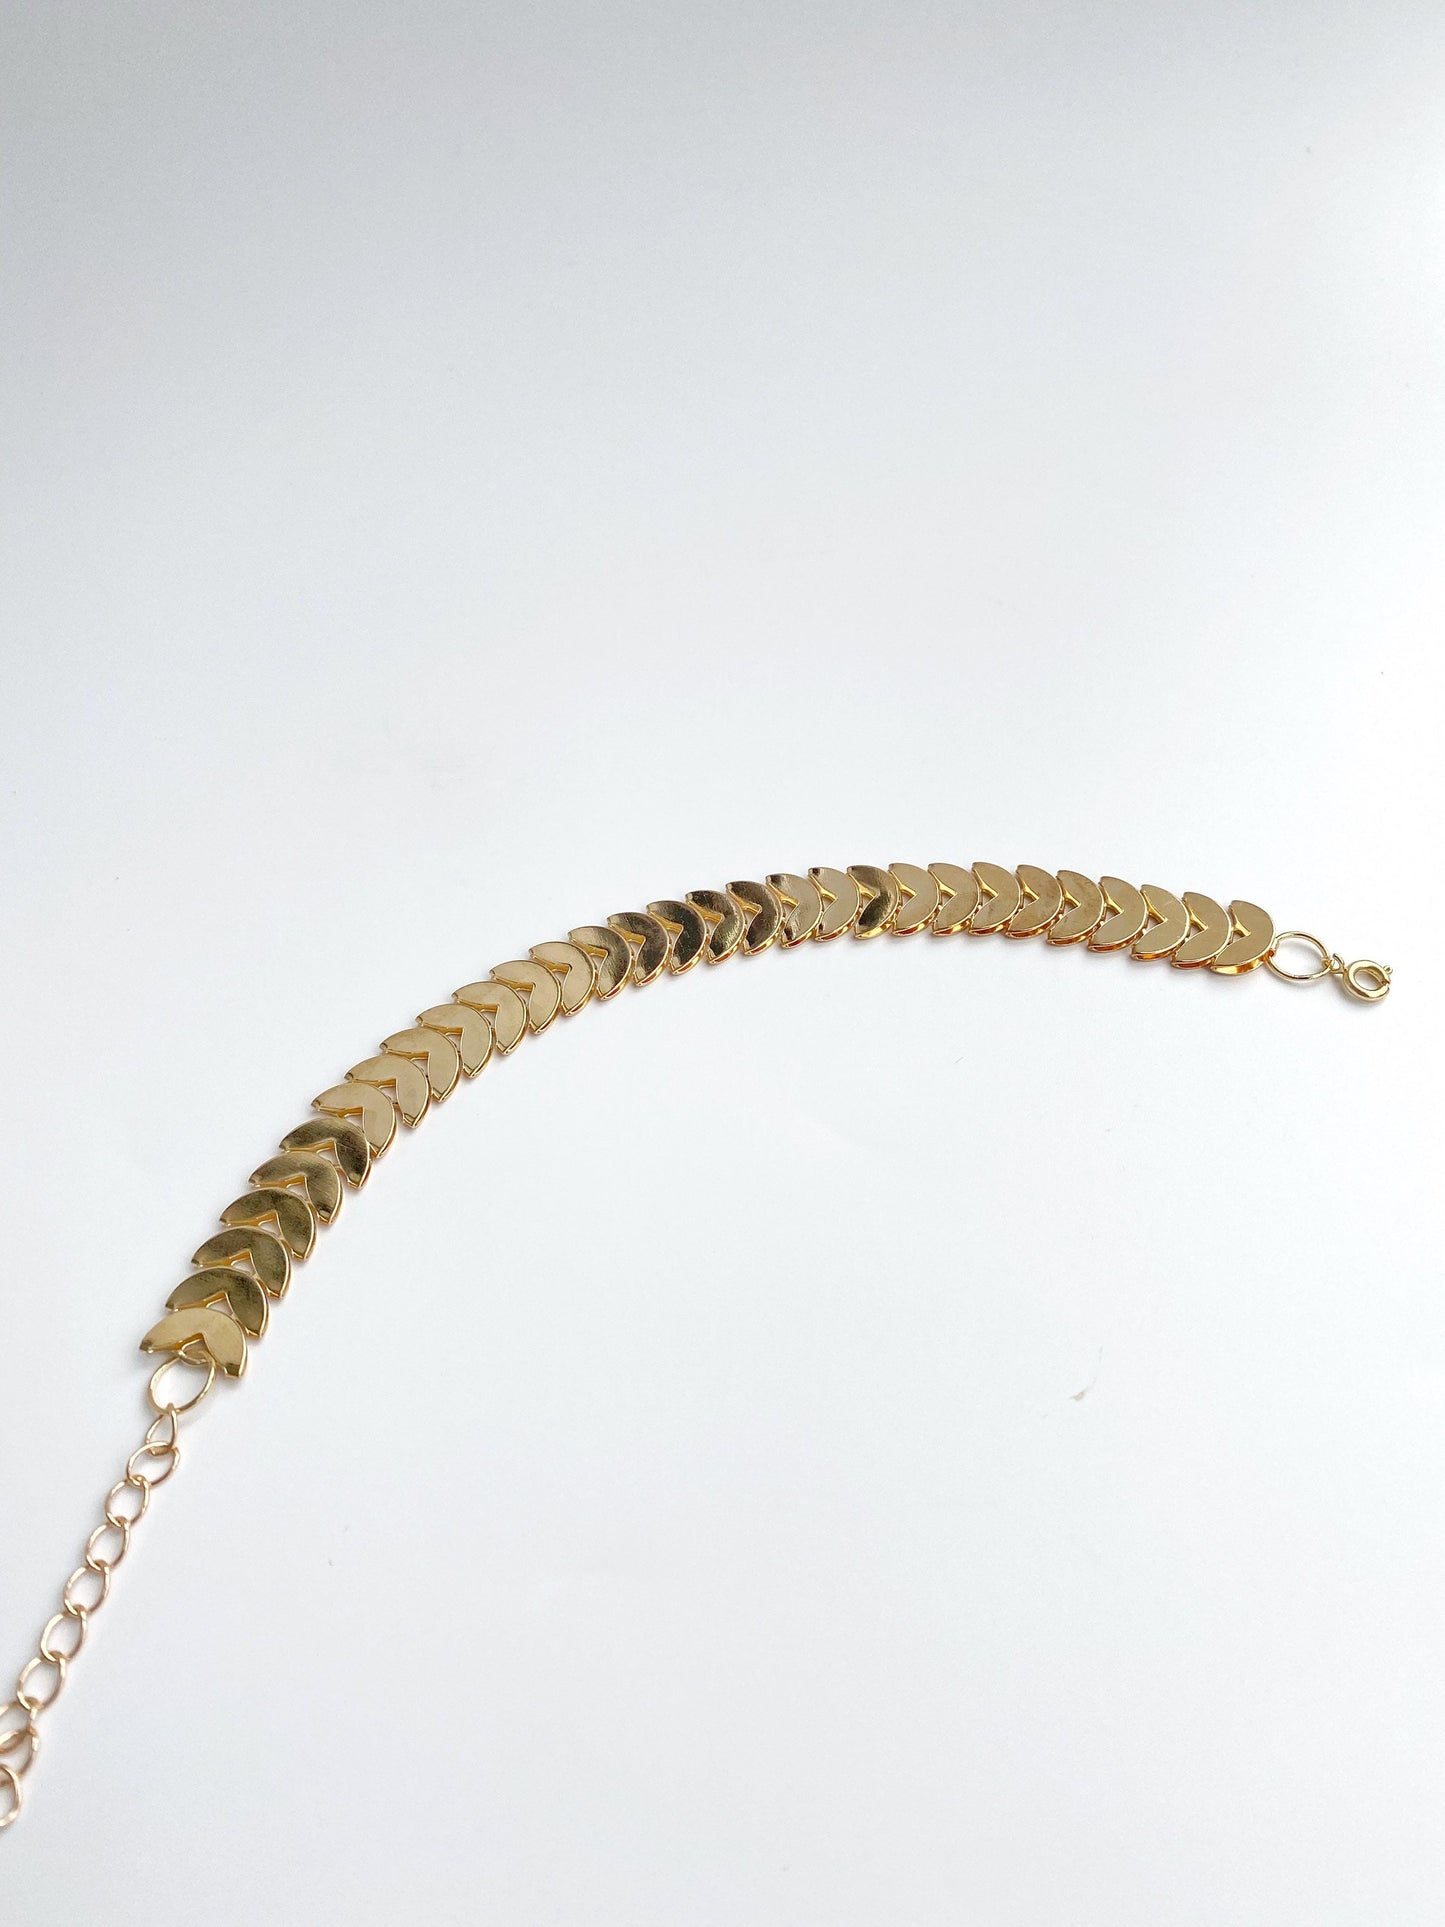 Thick Chevron Chain Bracelet • Fishbone Stacking Bracelet • Fish Tail